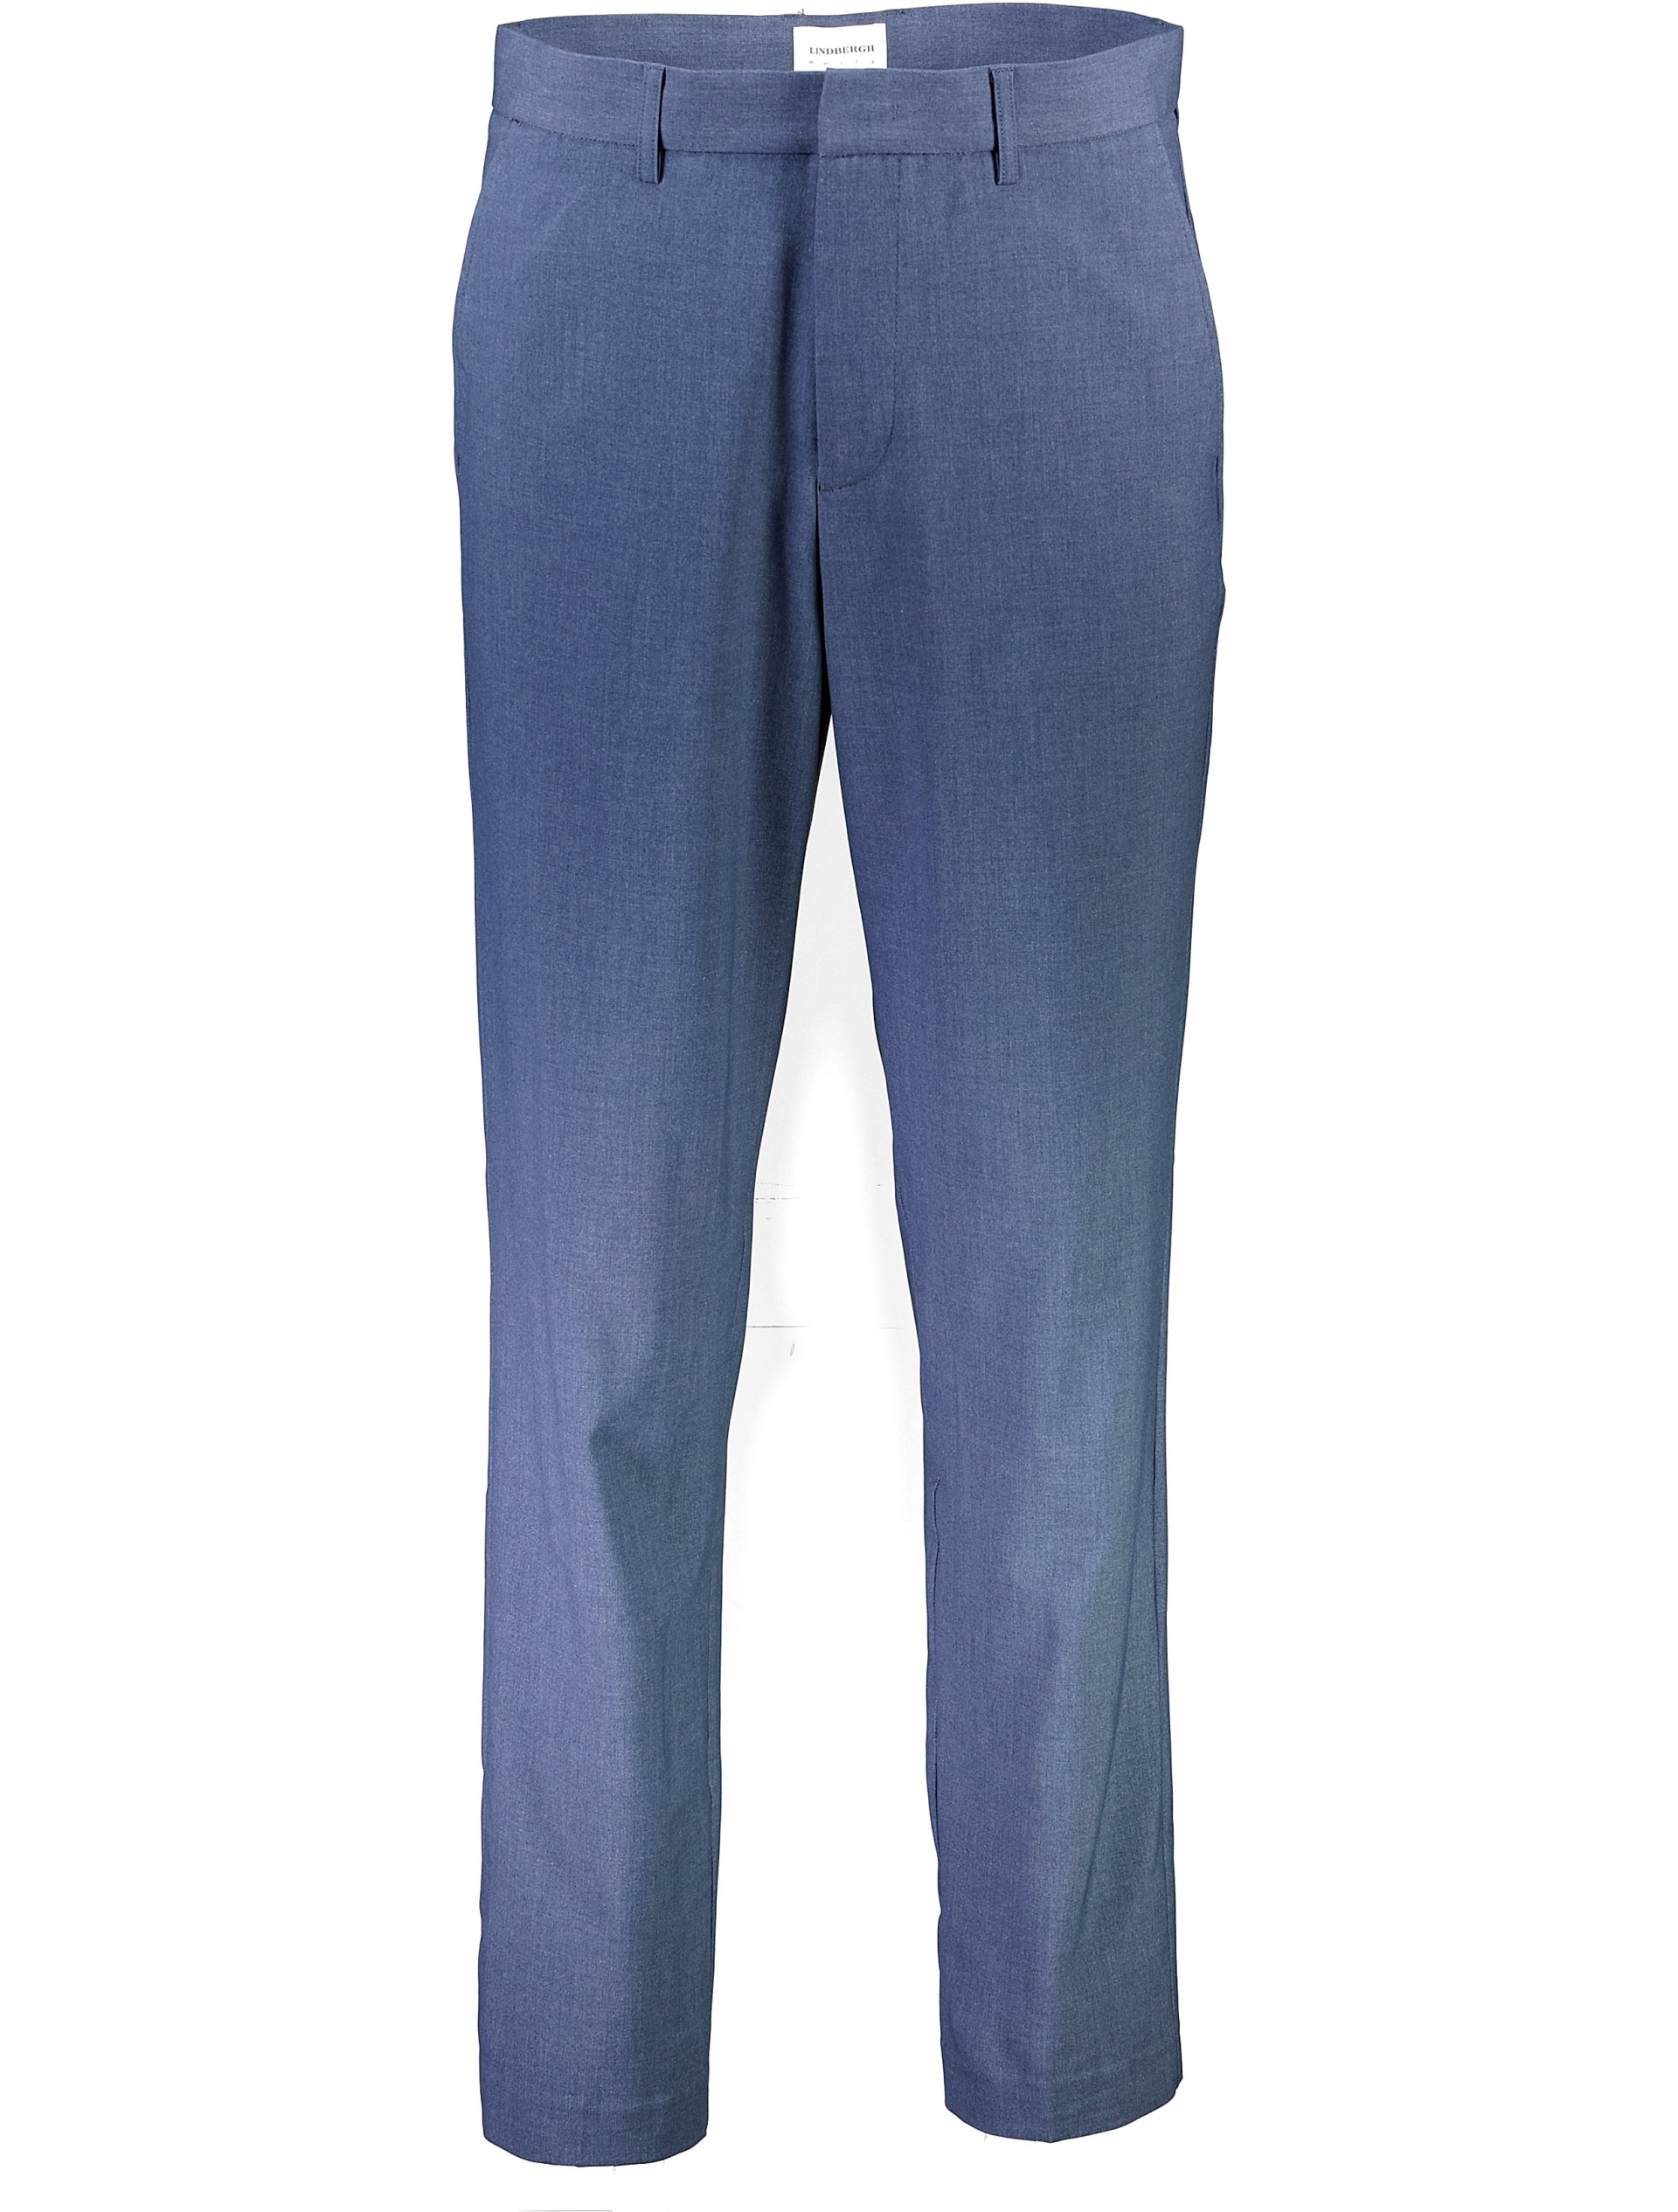 Lindbergh Classic trousers blue / blue mix